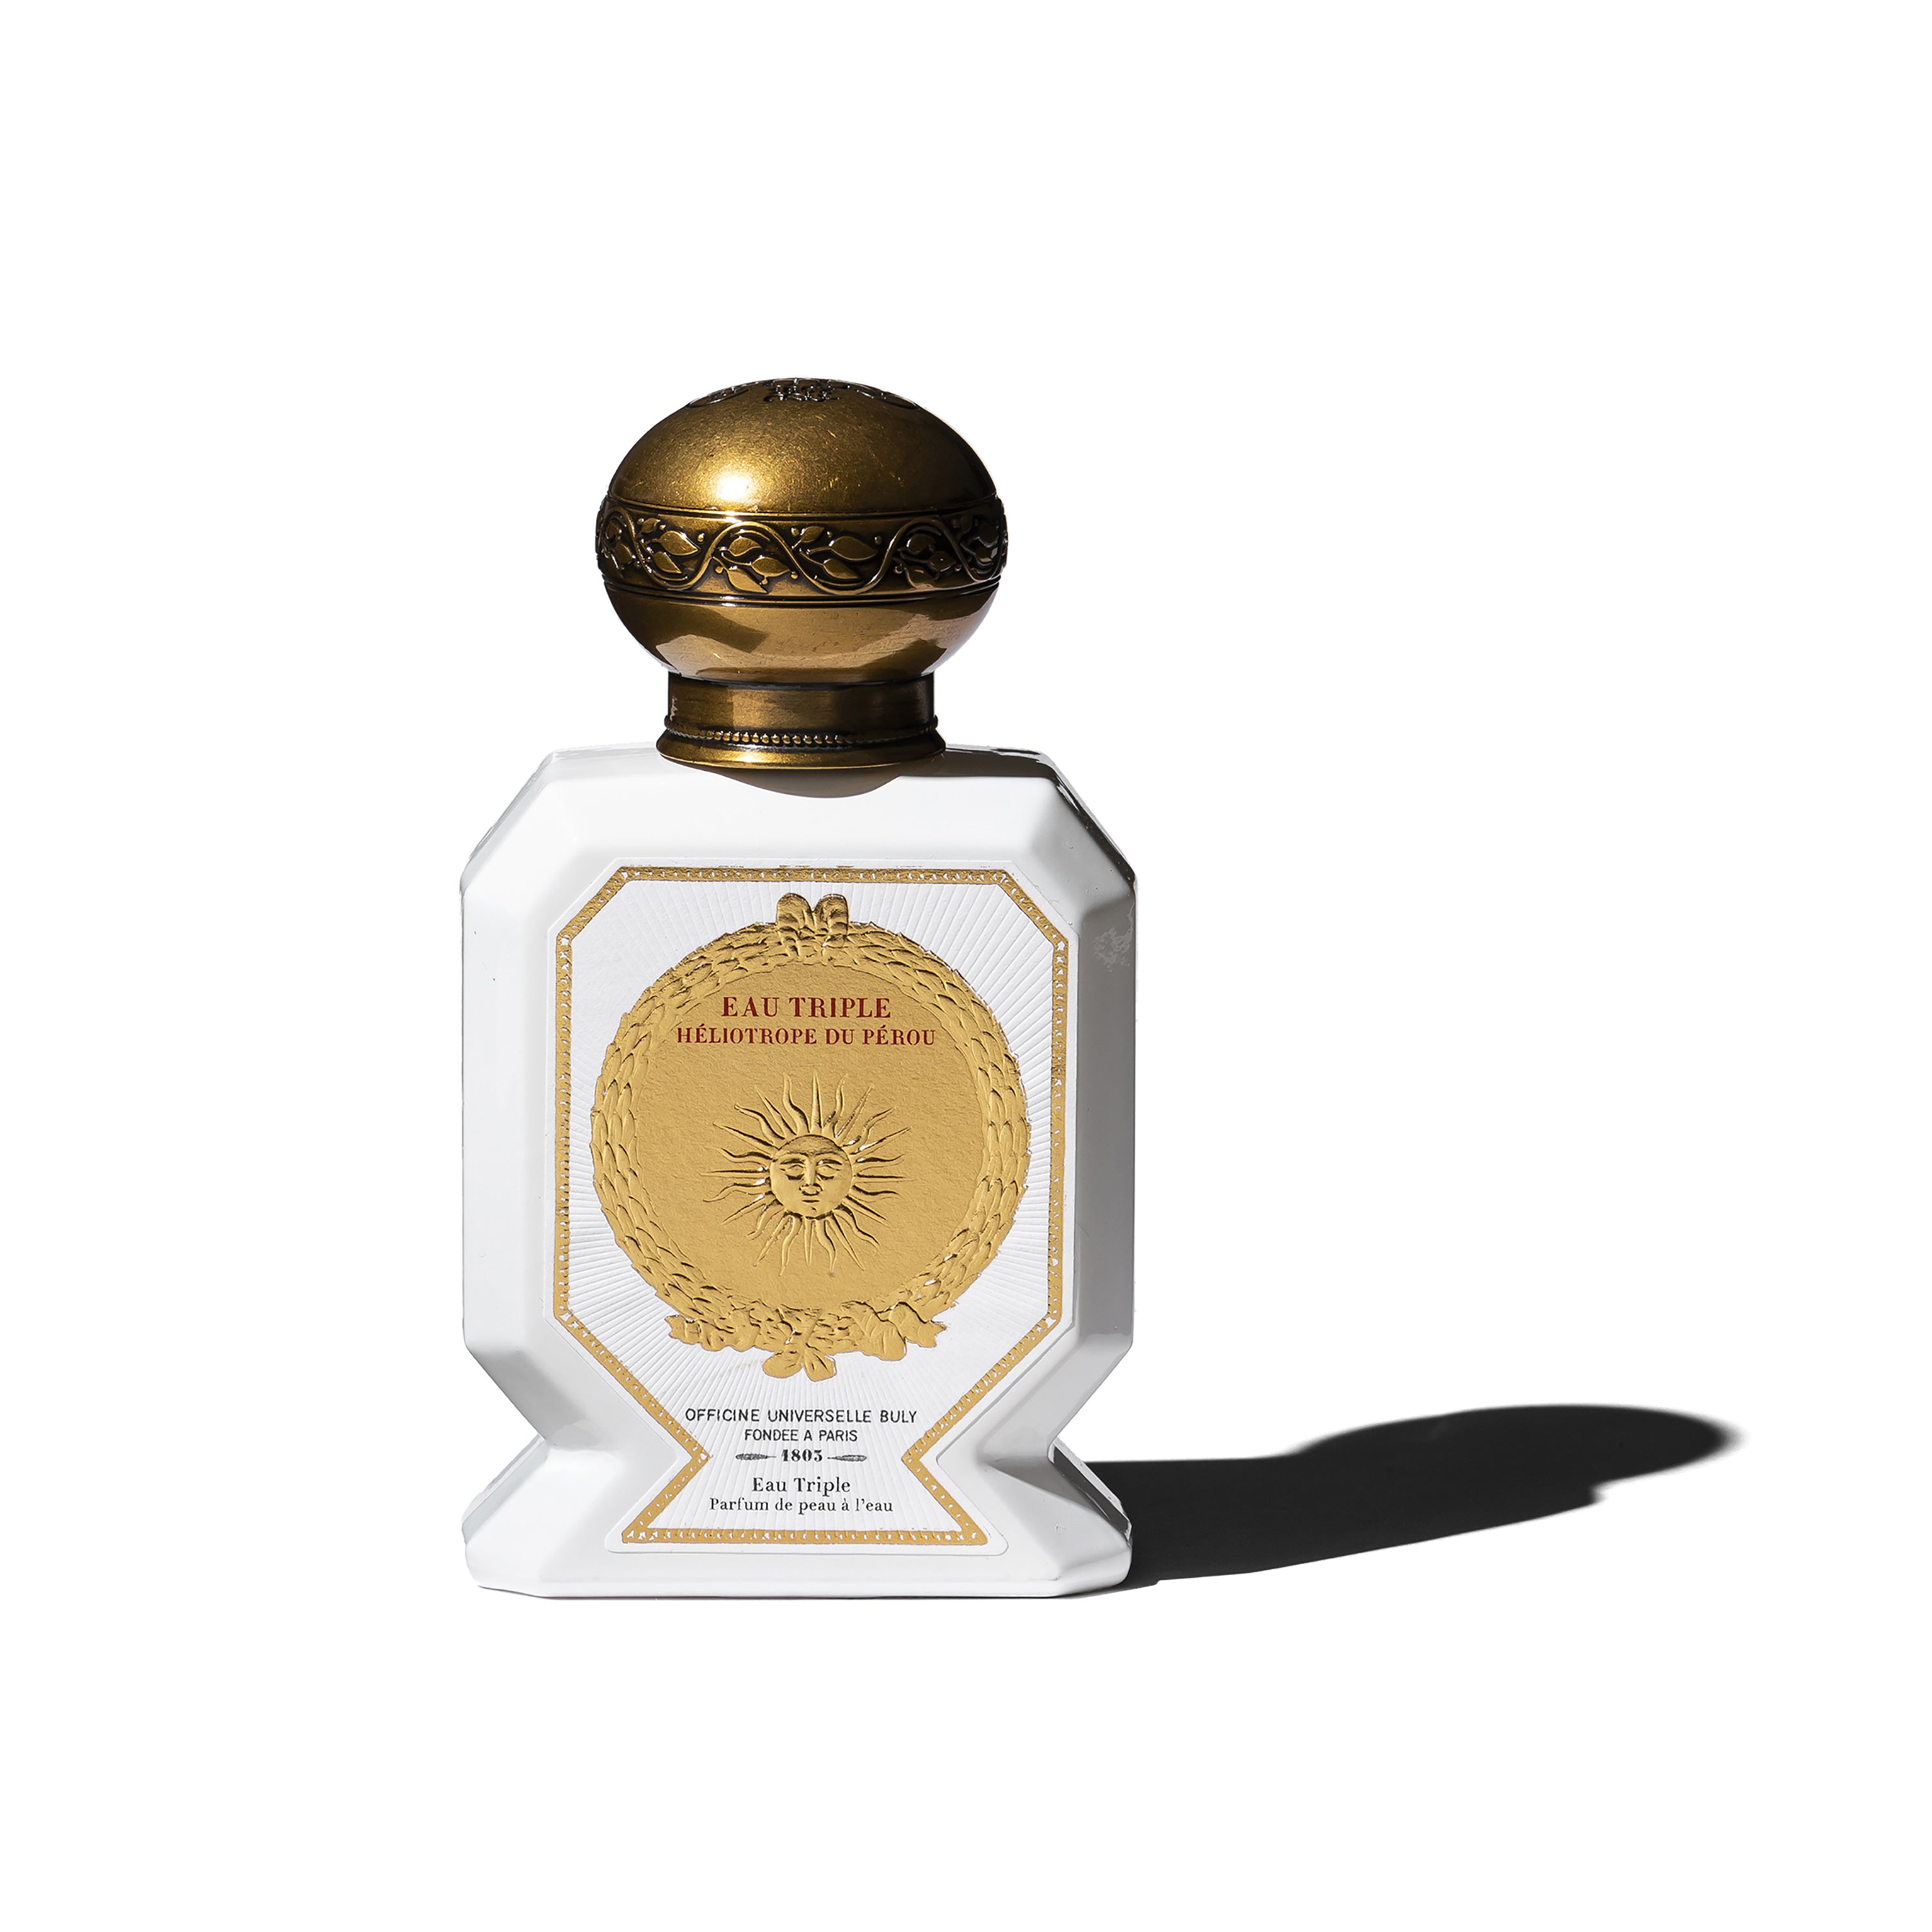 Long Lasting Luxury Perfume for Men - Mesmerizing Scents - Swiss